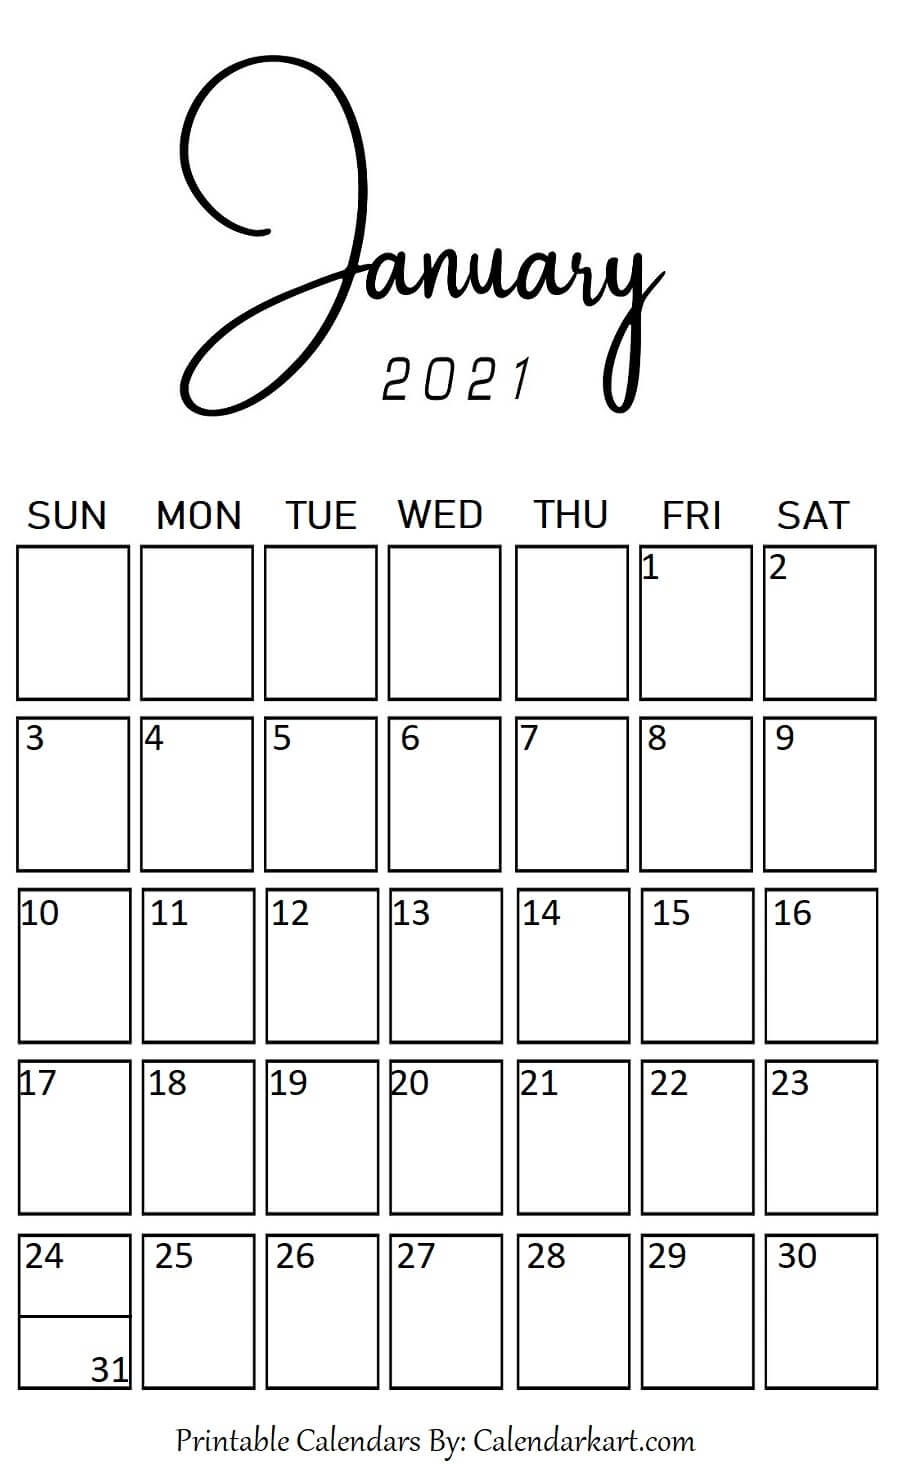 Catch 2021 Calendar Spaces